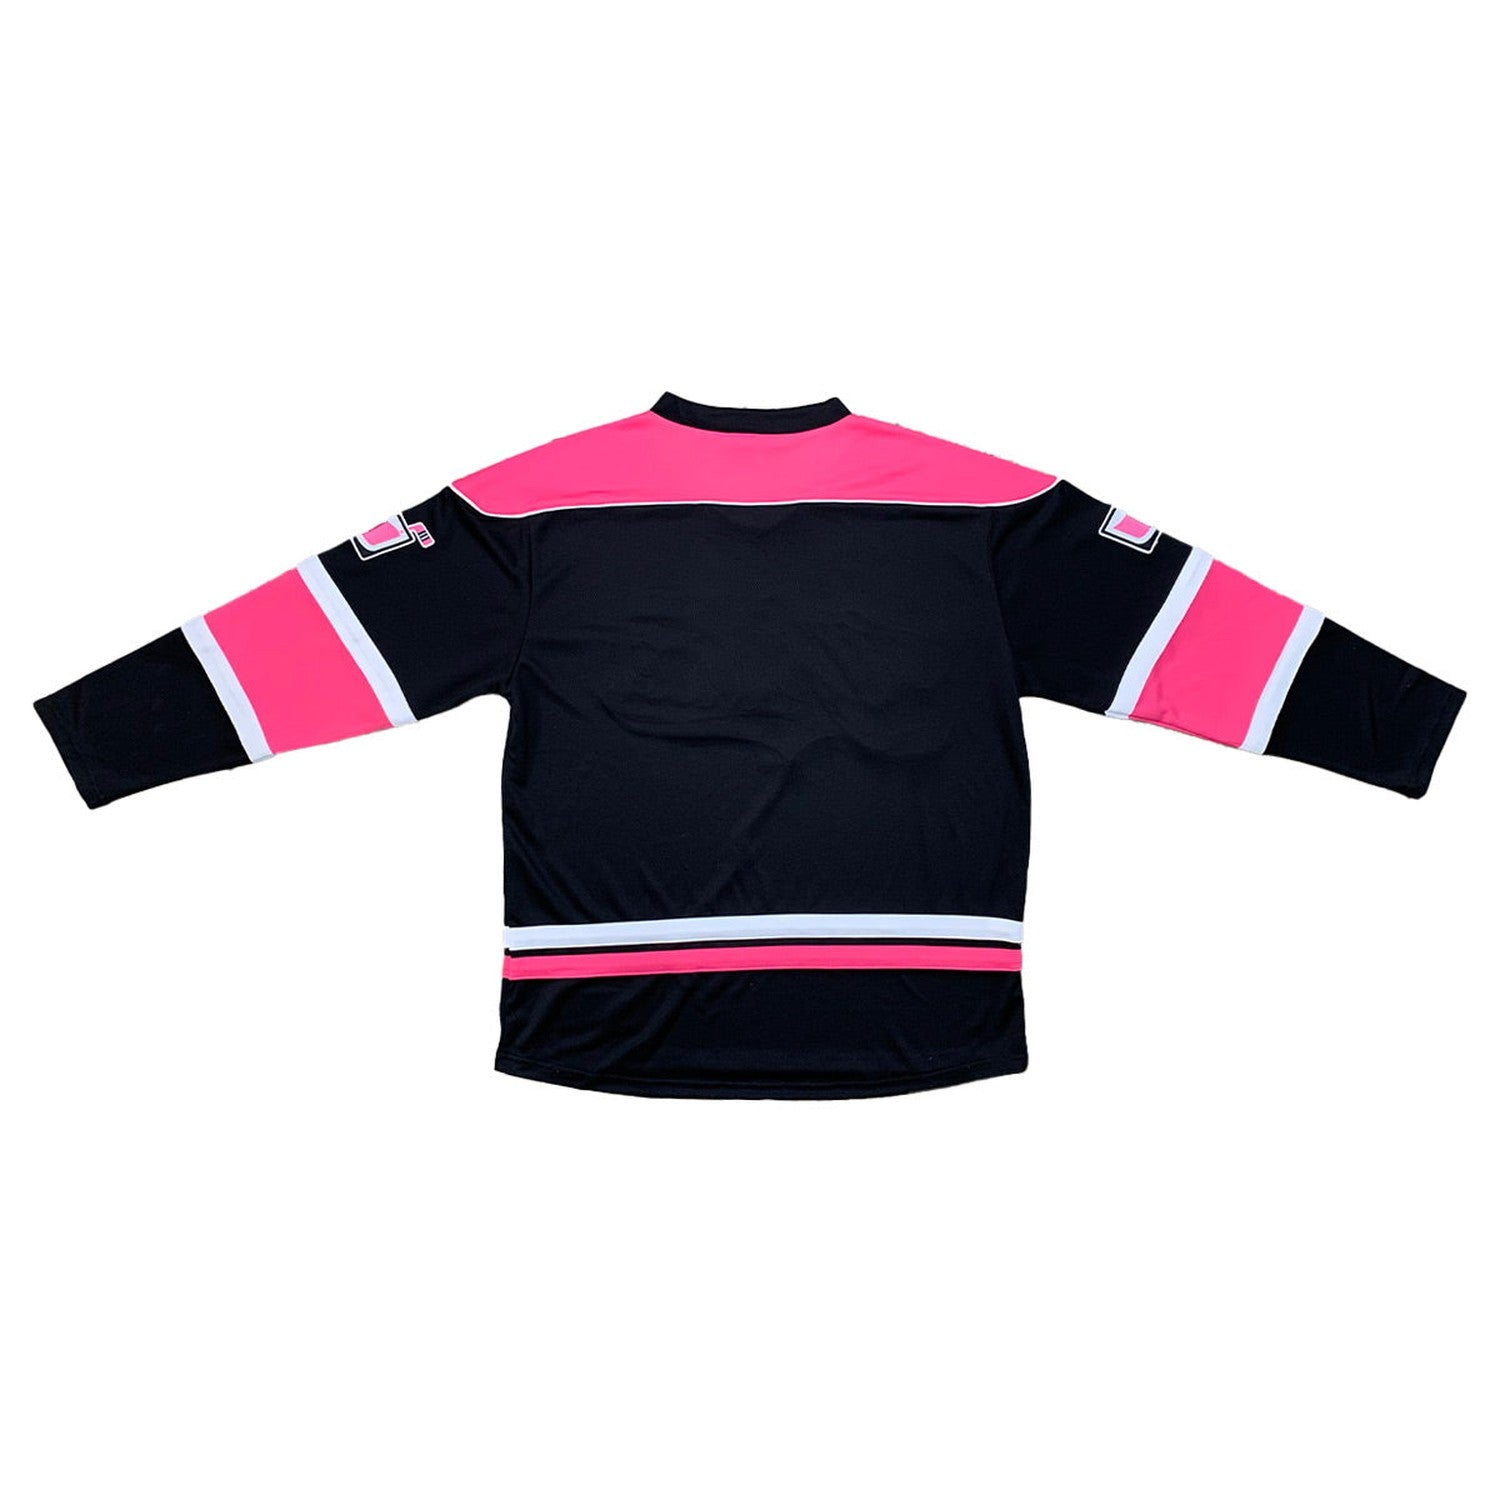 Tron DJ100 Dry Fit Hockey Jersey (Bubble Gum Pink)